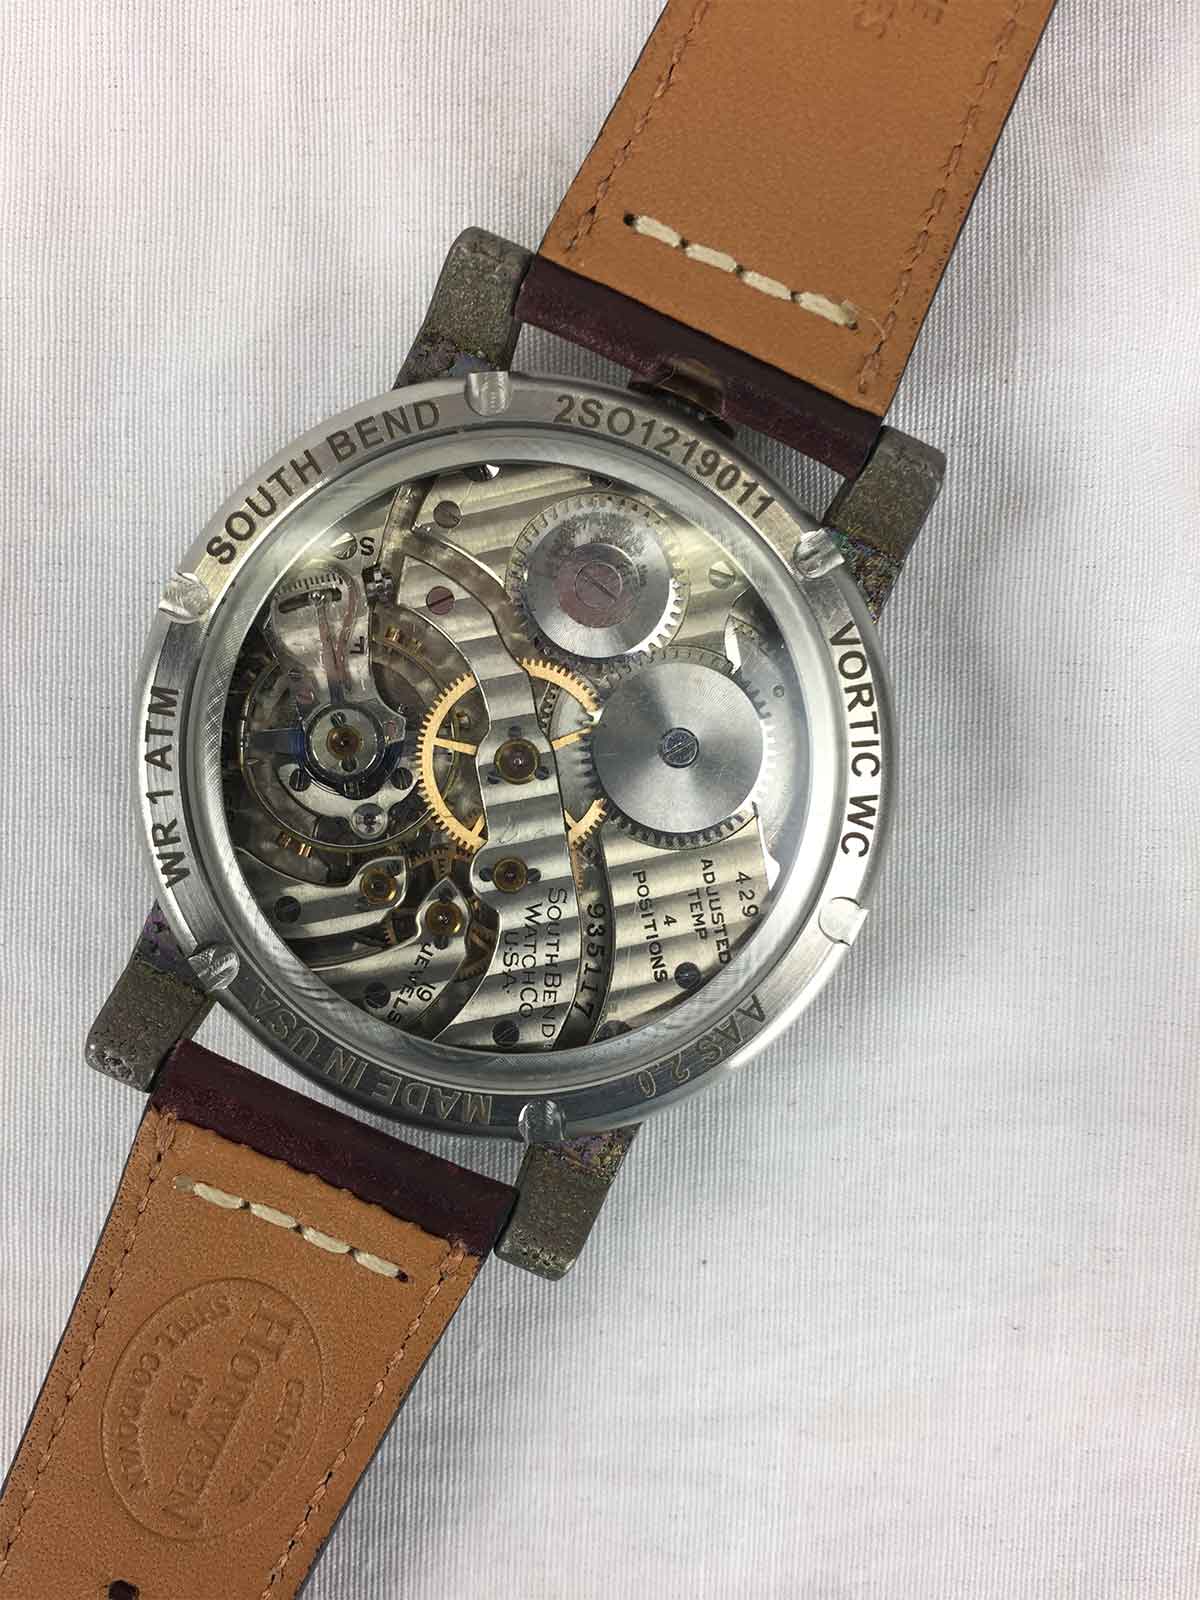 Exhibition case of the Vortic Watch Co., Harley Davidson wristwatch.